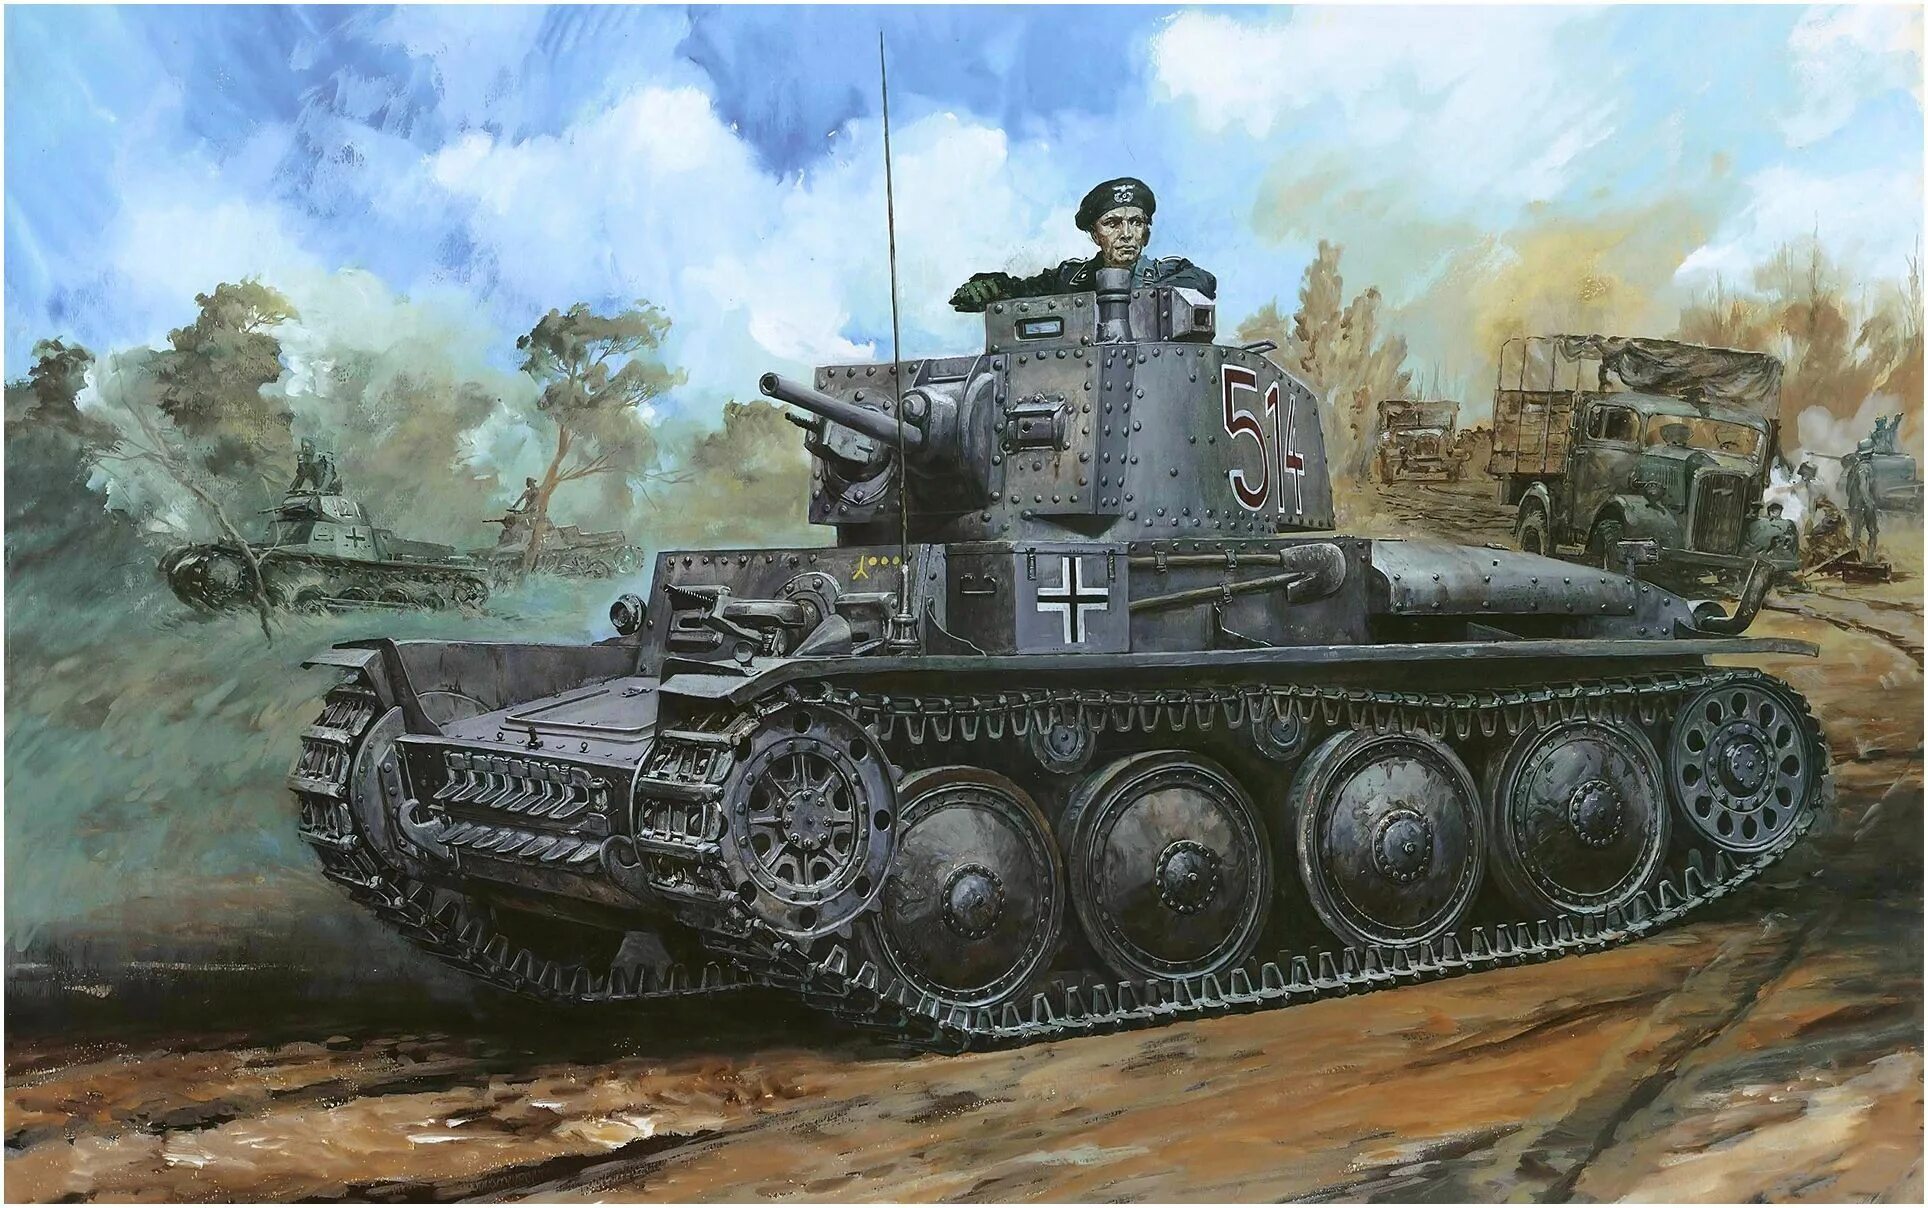 Танк PZ 38 T. Немецкий танк PZ Kpfw 38 t. Lt vz.38 PZKPFW 38 T. PZ 35t 1941. Немецкий легкий танк